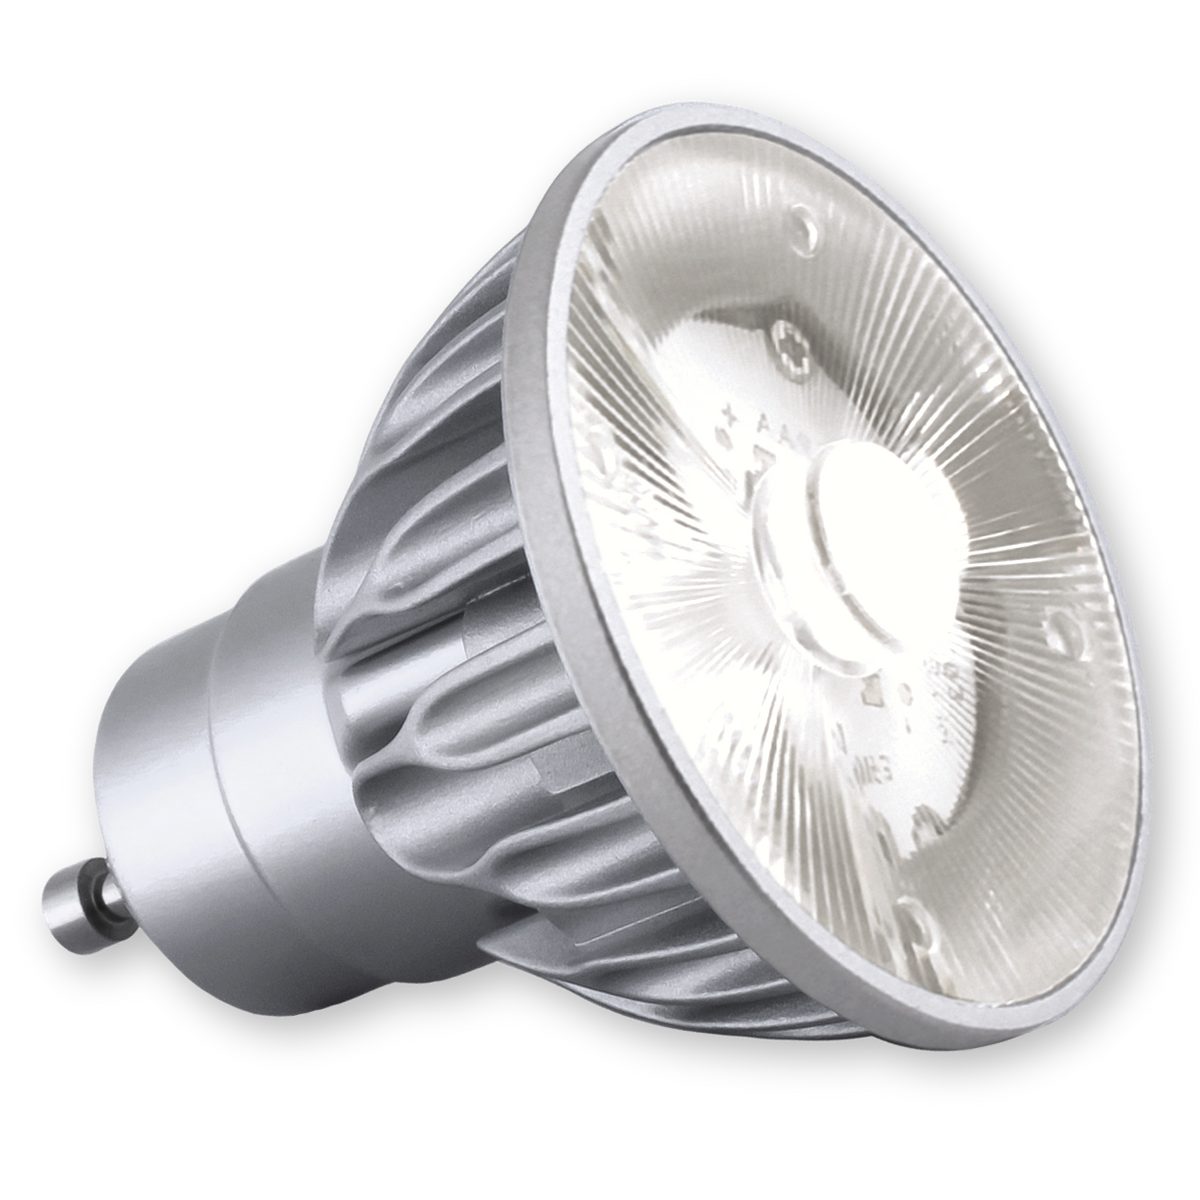 Soraa LED-Leuchtmittel Soraa Vivid 3 MR16 GU10 - Vollspektrum LED - 7.5Watt, 10°, GU10, Neutralweiß, Vollspektrum LED mit CRI 95 R9 - dimmbar